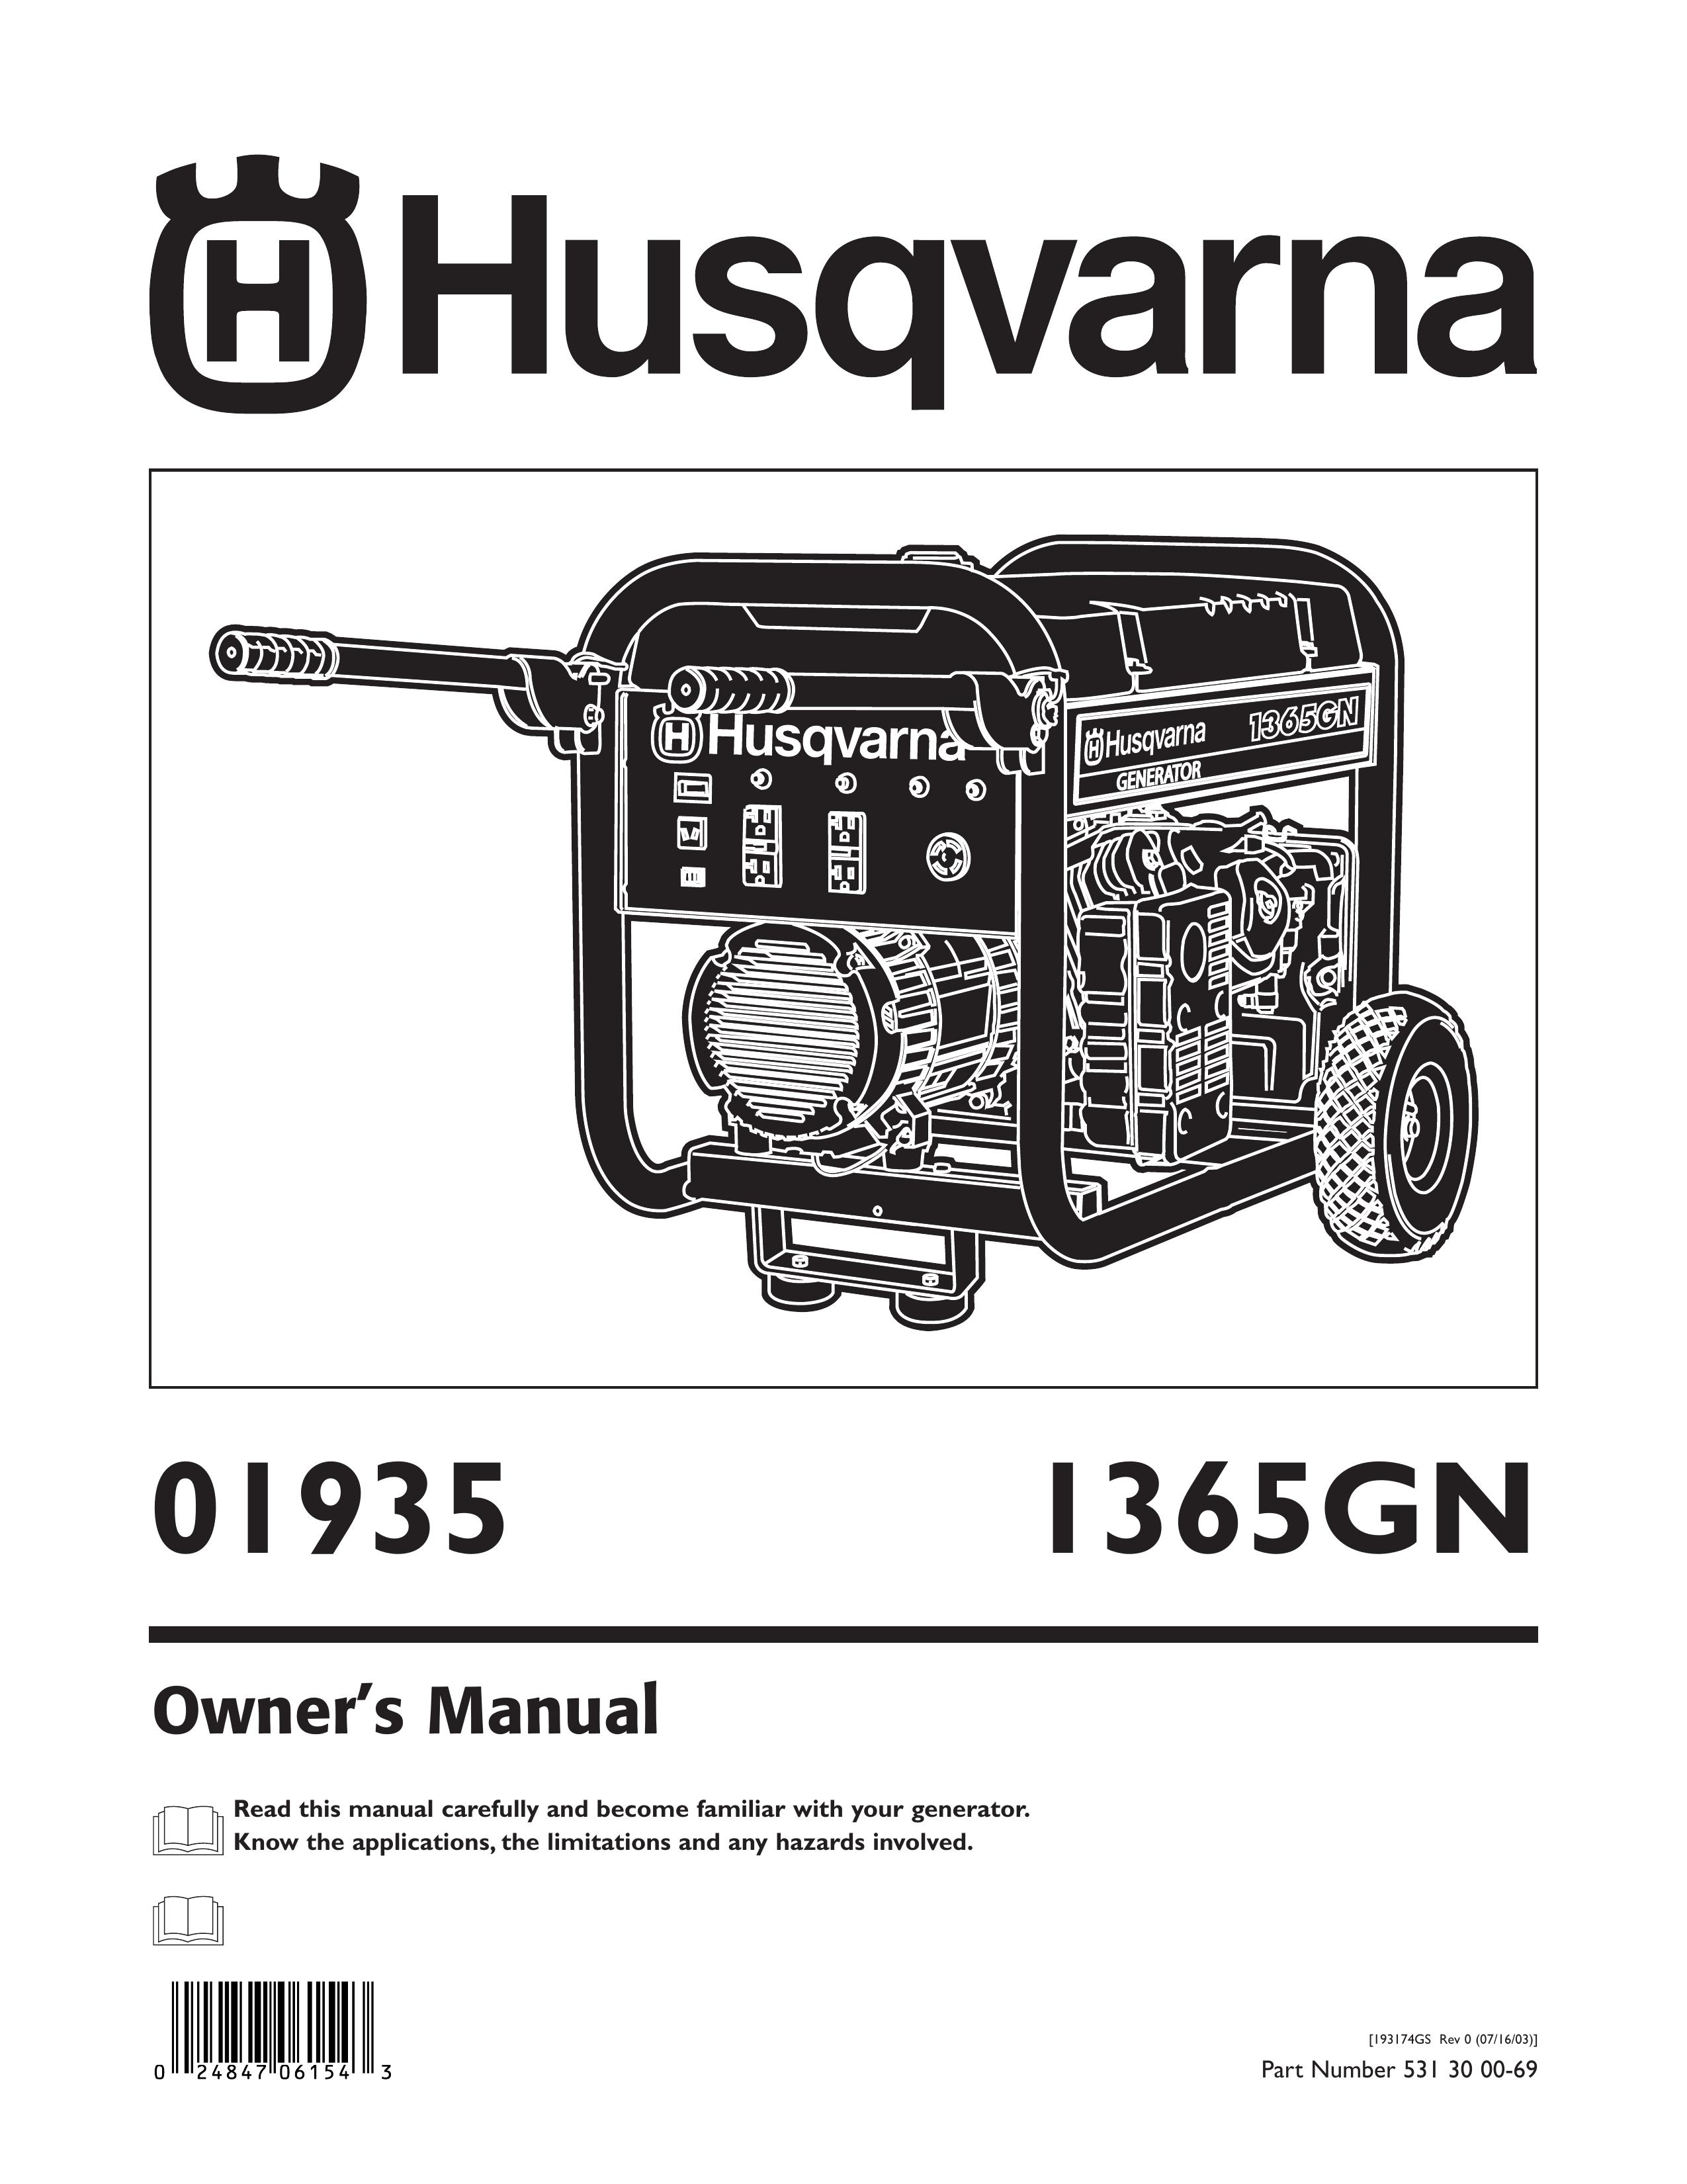 Husqvarna 1365GN Portable Generator User Manual